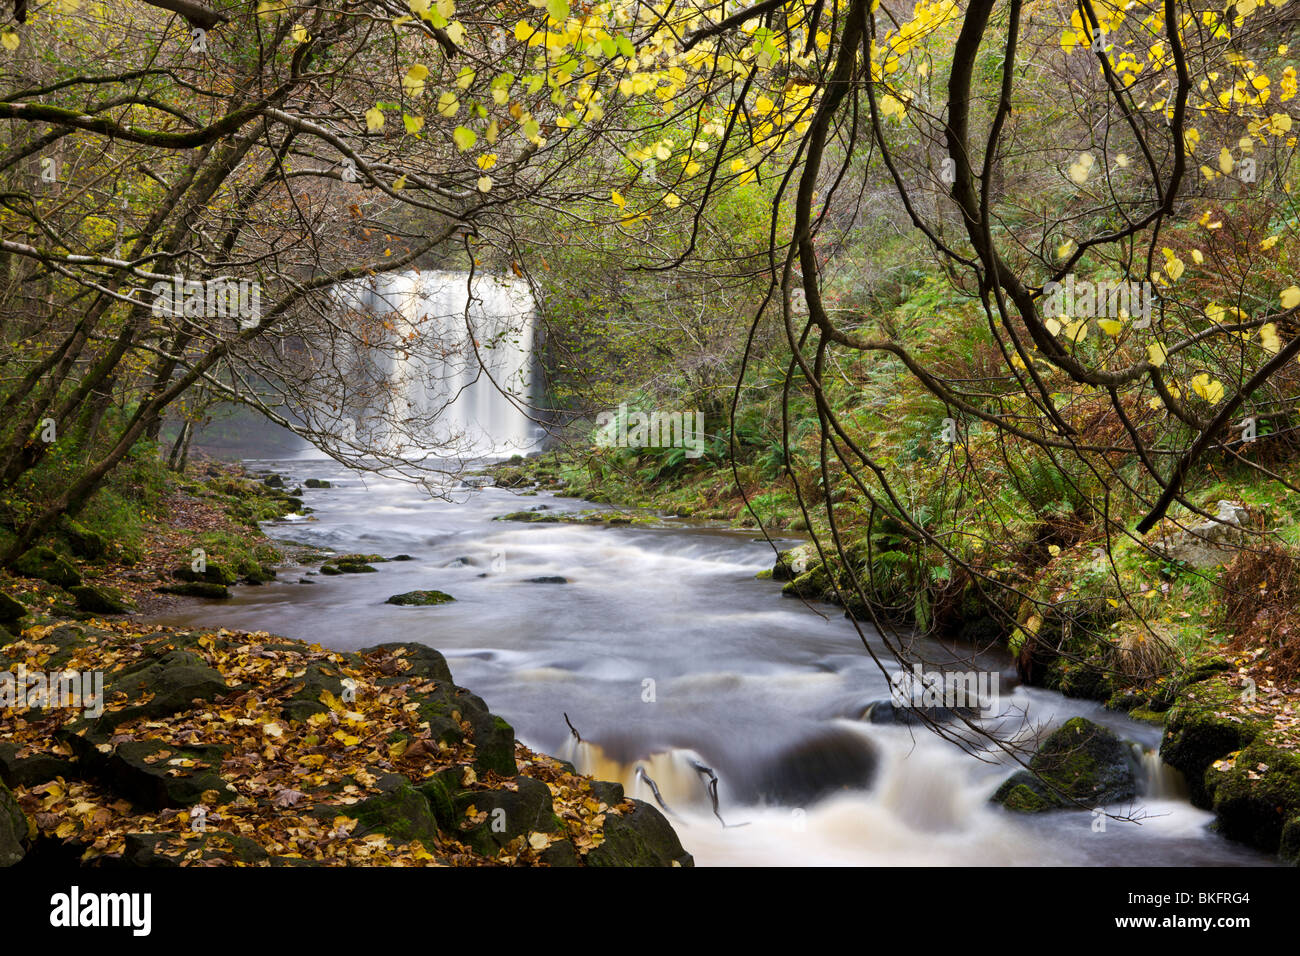 Sgwd yr Eira Wasserfall am Fluss Afon Mellte in der Nähe von Ystradfellte, Brecon Beacons National Park, Powys, Wales, UK. Stockfoto